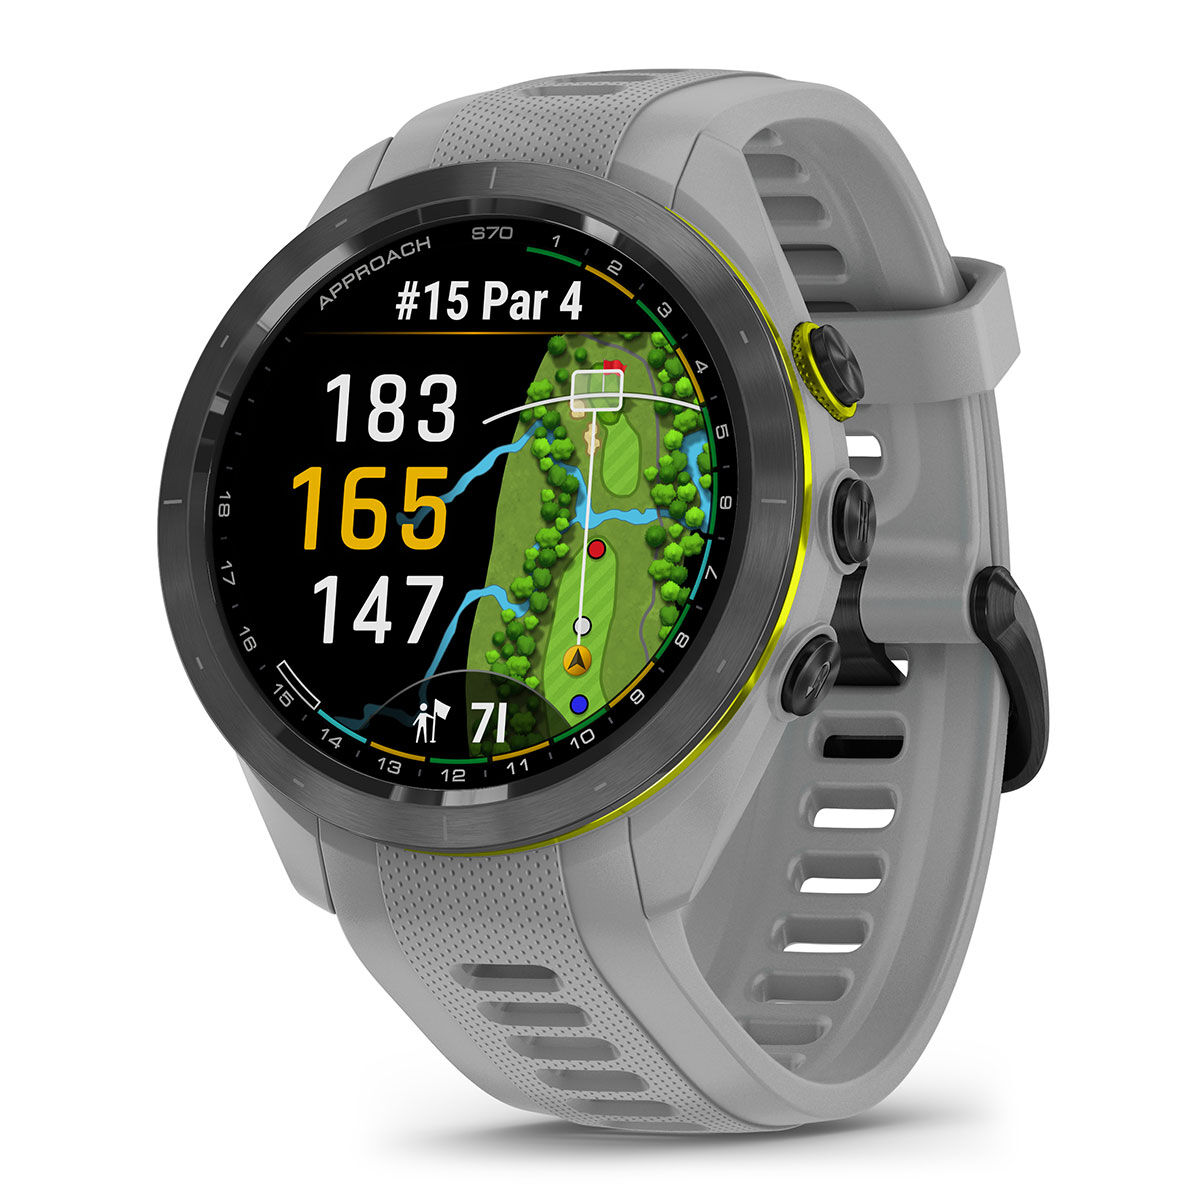 Garmin Golf GPS Watch, Approach S70 42mm, Grey | American Golf von Garmin